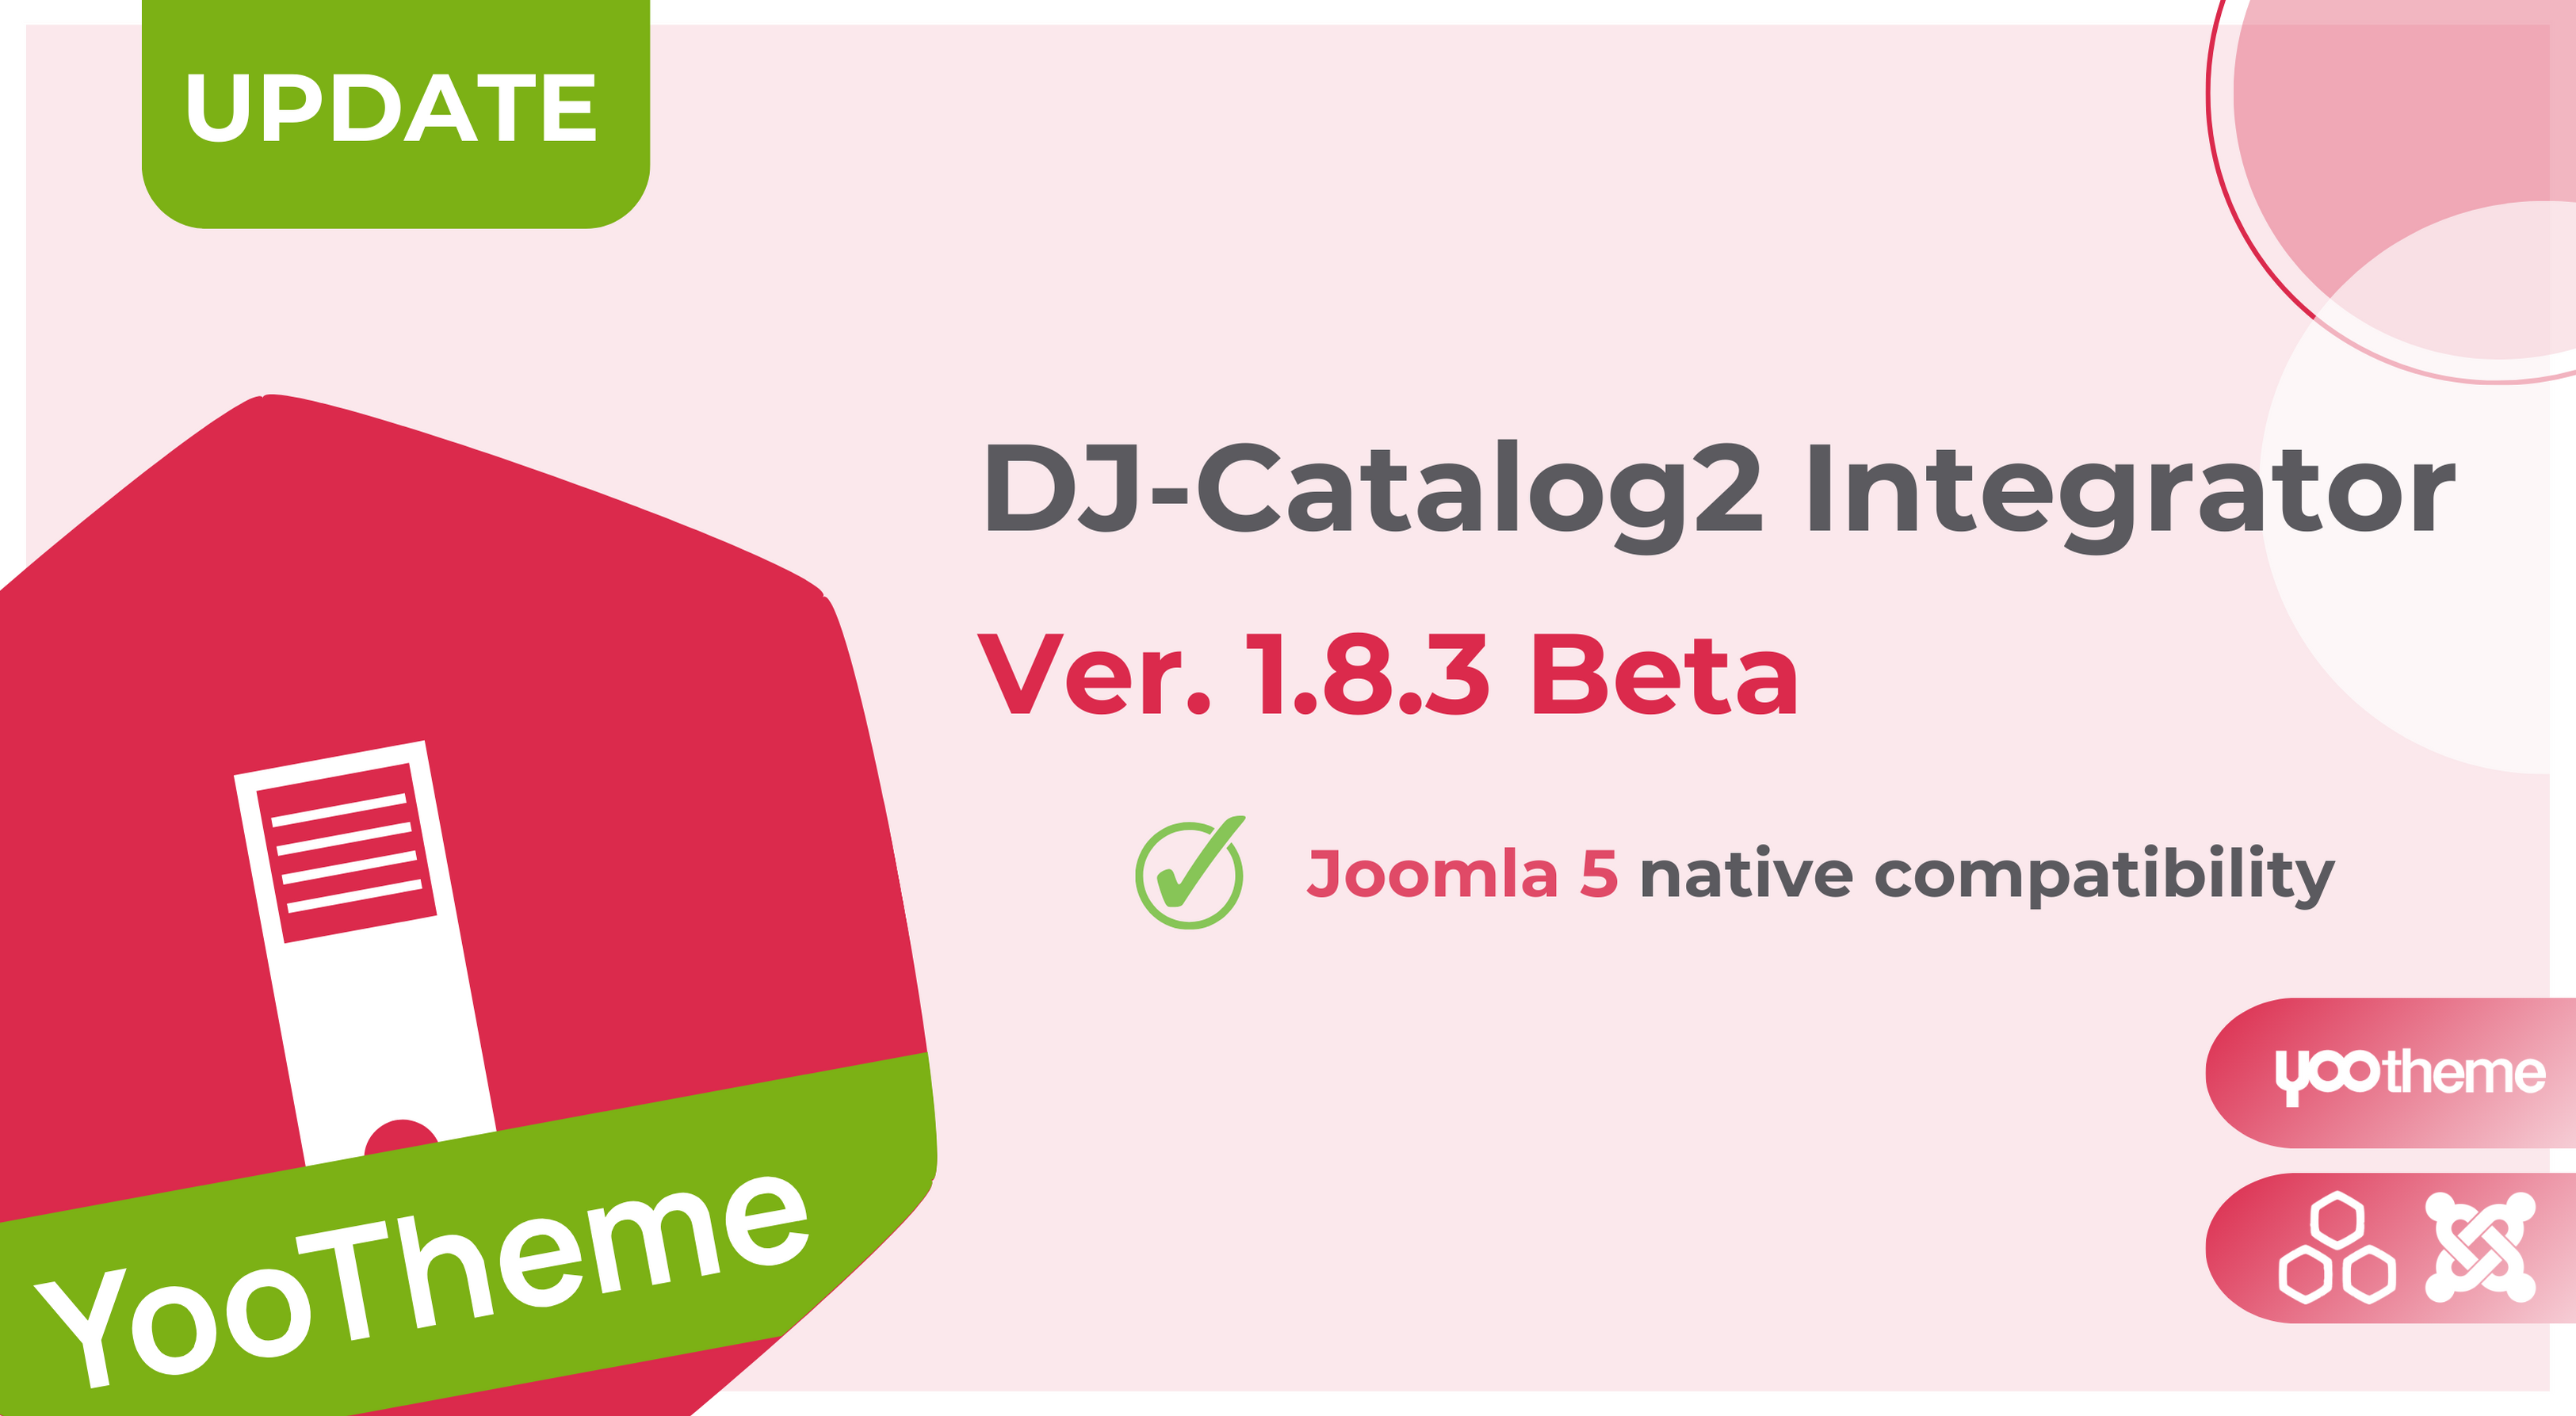 DJ-Catalog2 Integrator version 1.8.3 beta comes with the Joomla 5 native compatibility